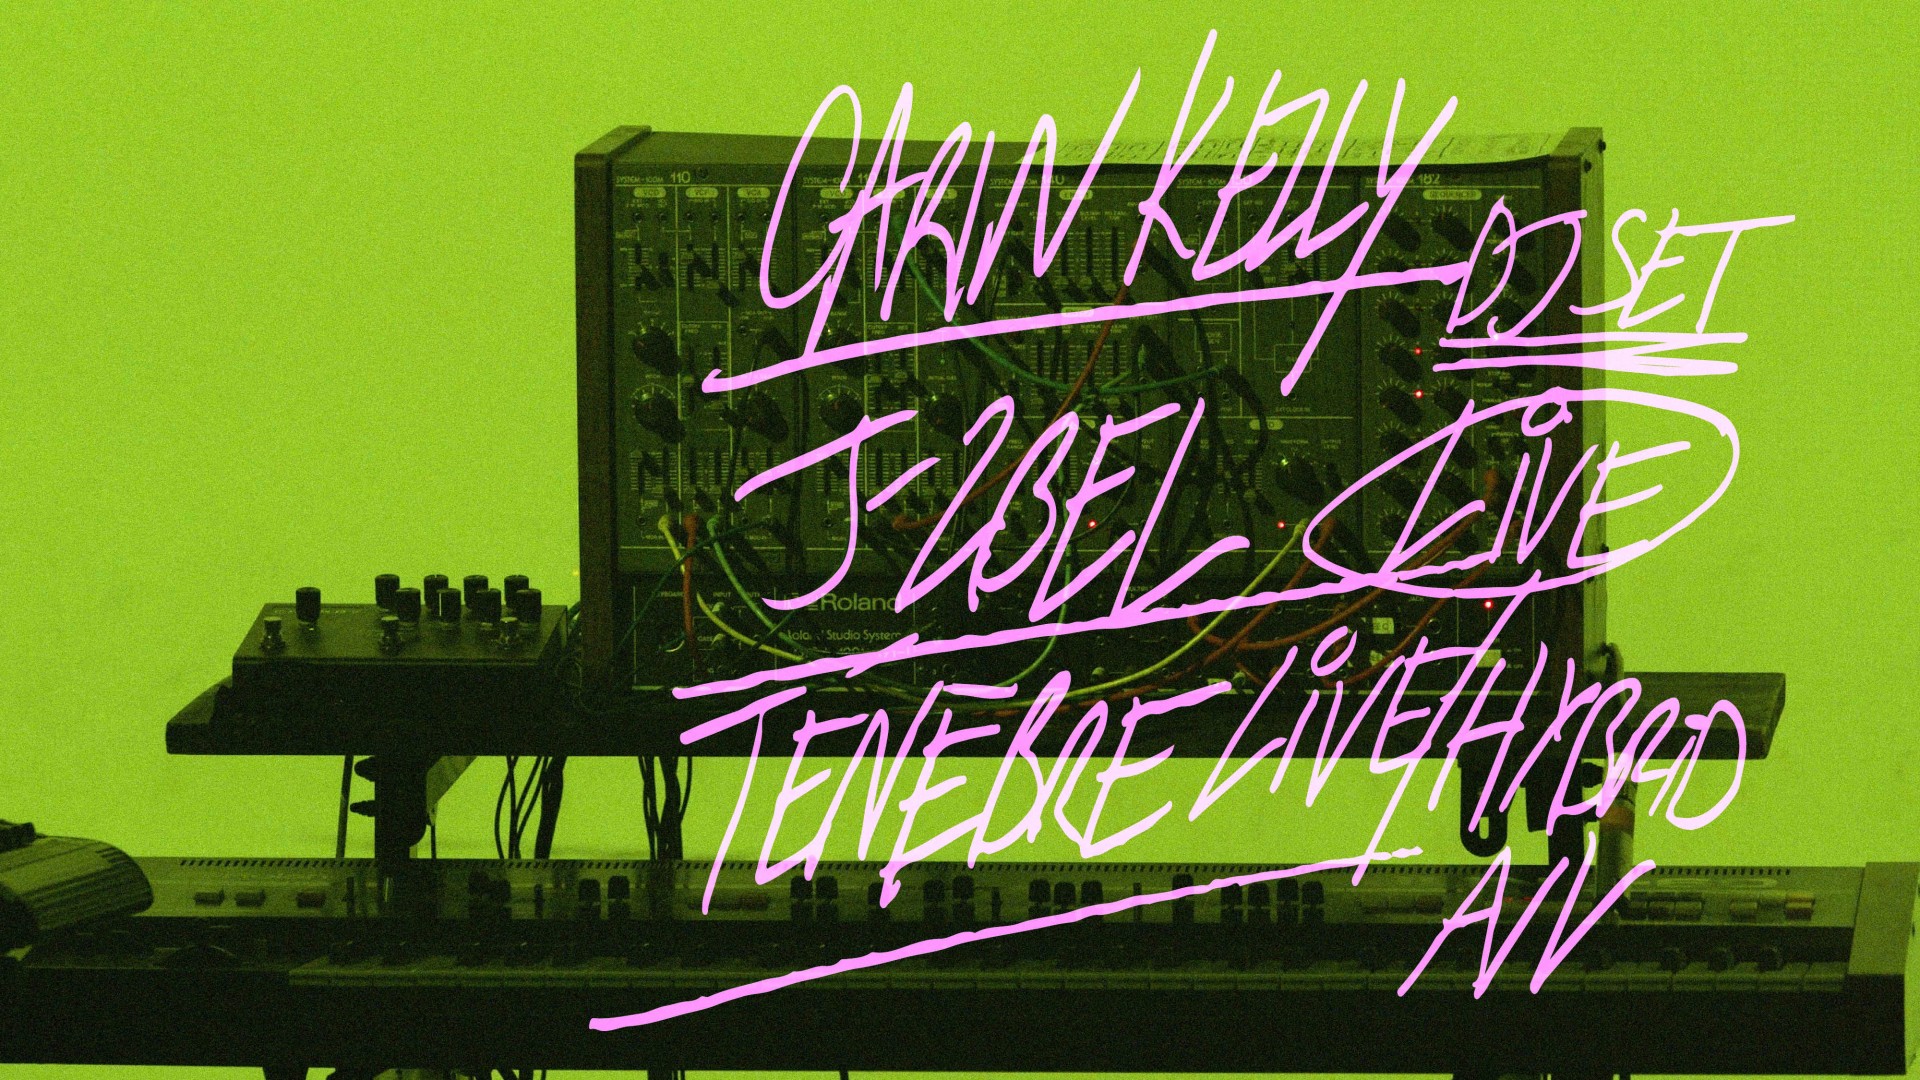 Culture club&nbsp;: carin kelly [DJ set] + J-Zbel [live] + Ténèbre [live hybrid A/V]